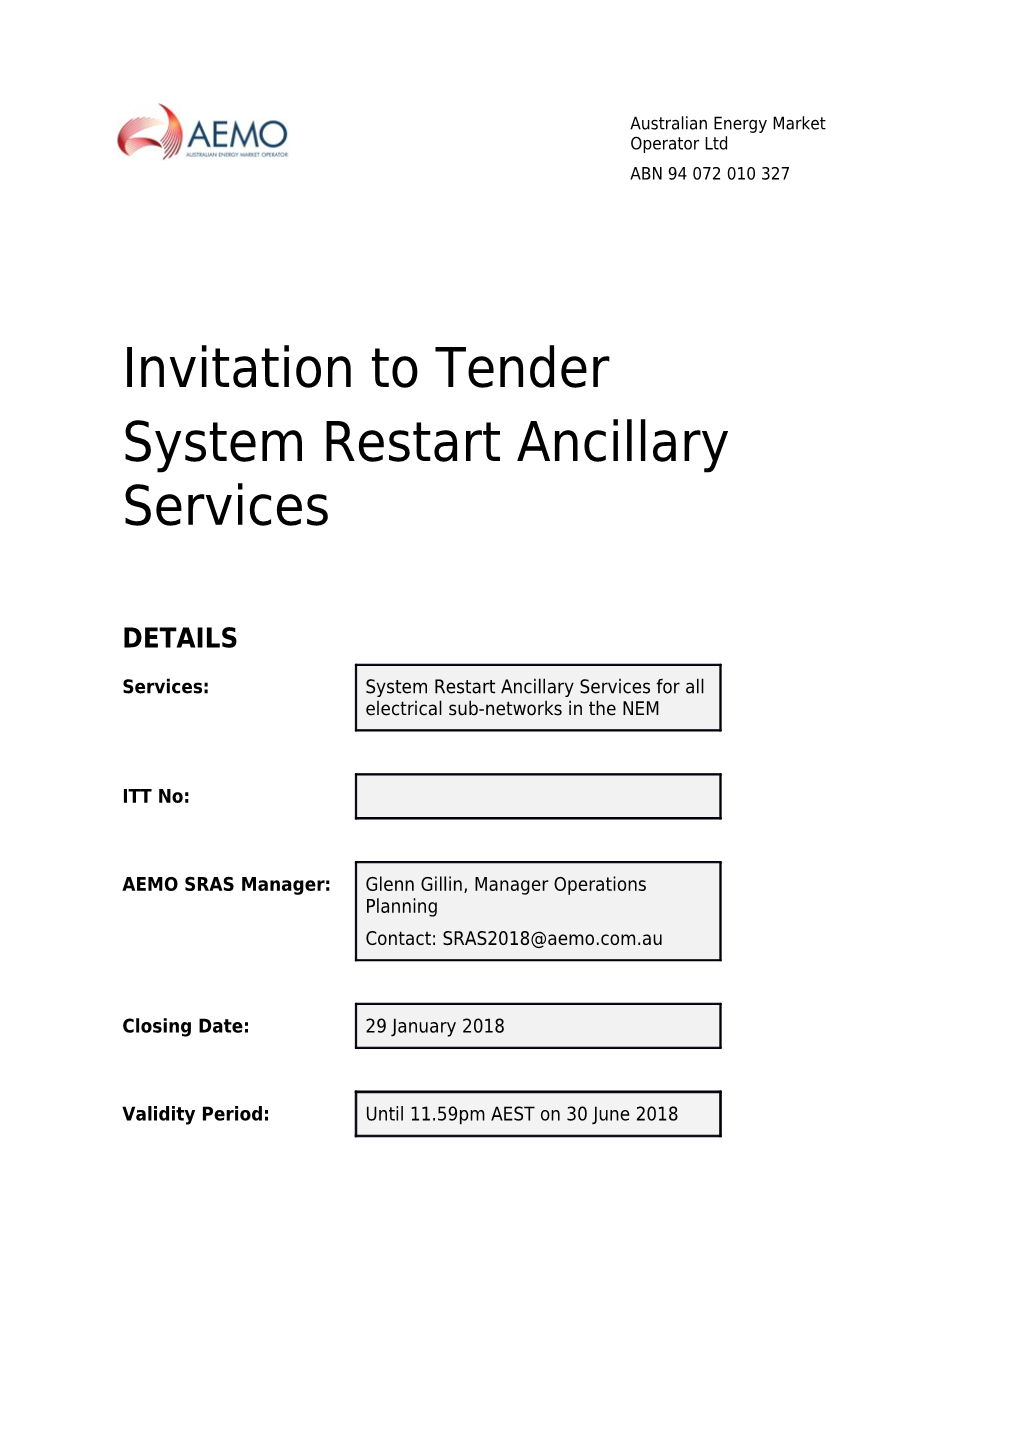 System Restart Ancillary Services